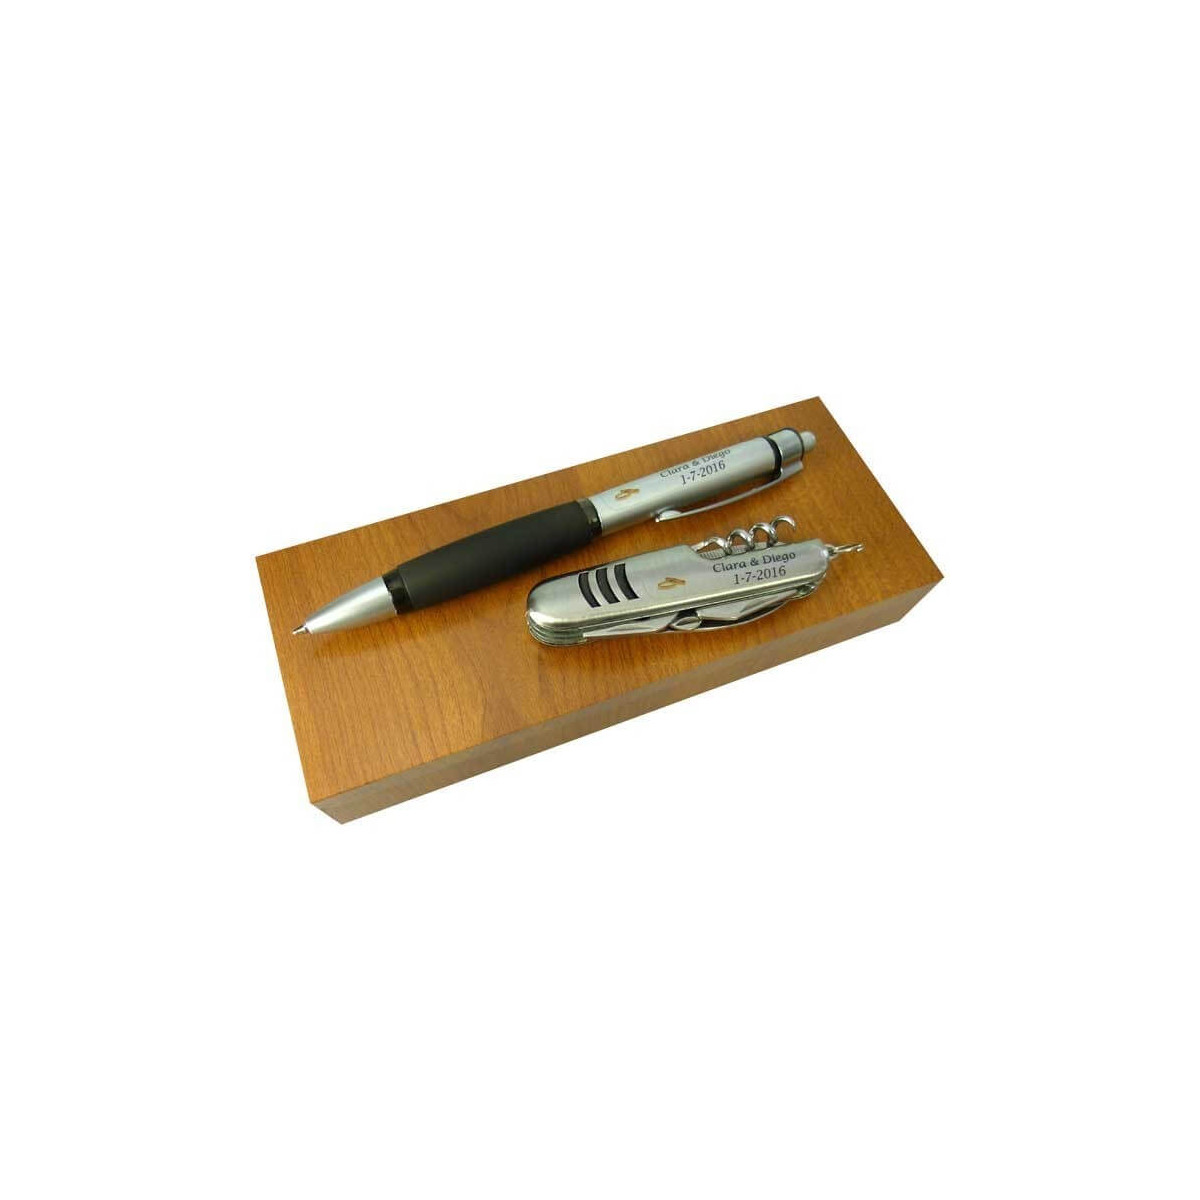 Navaja + bolígrafo en caja de madera personalizados para detalles de boda